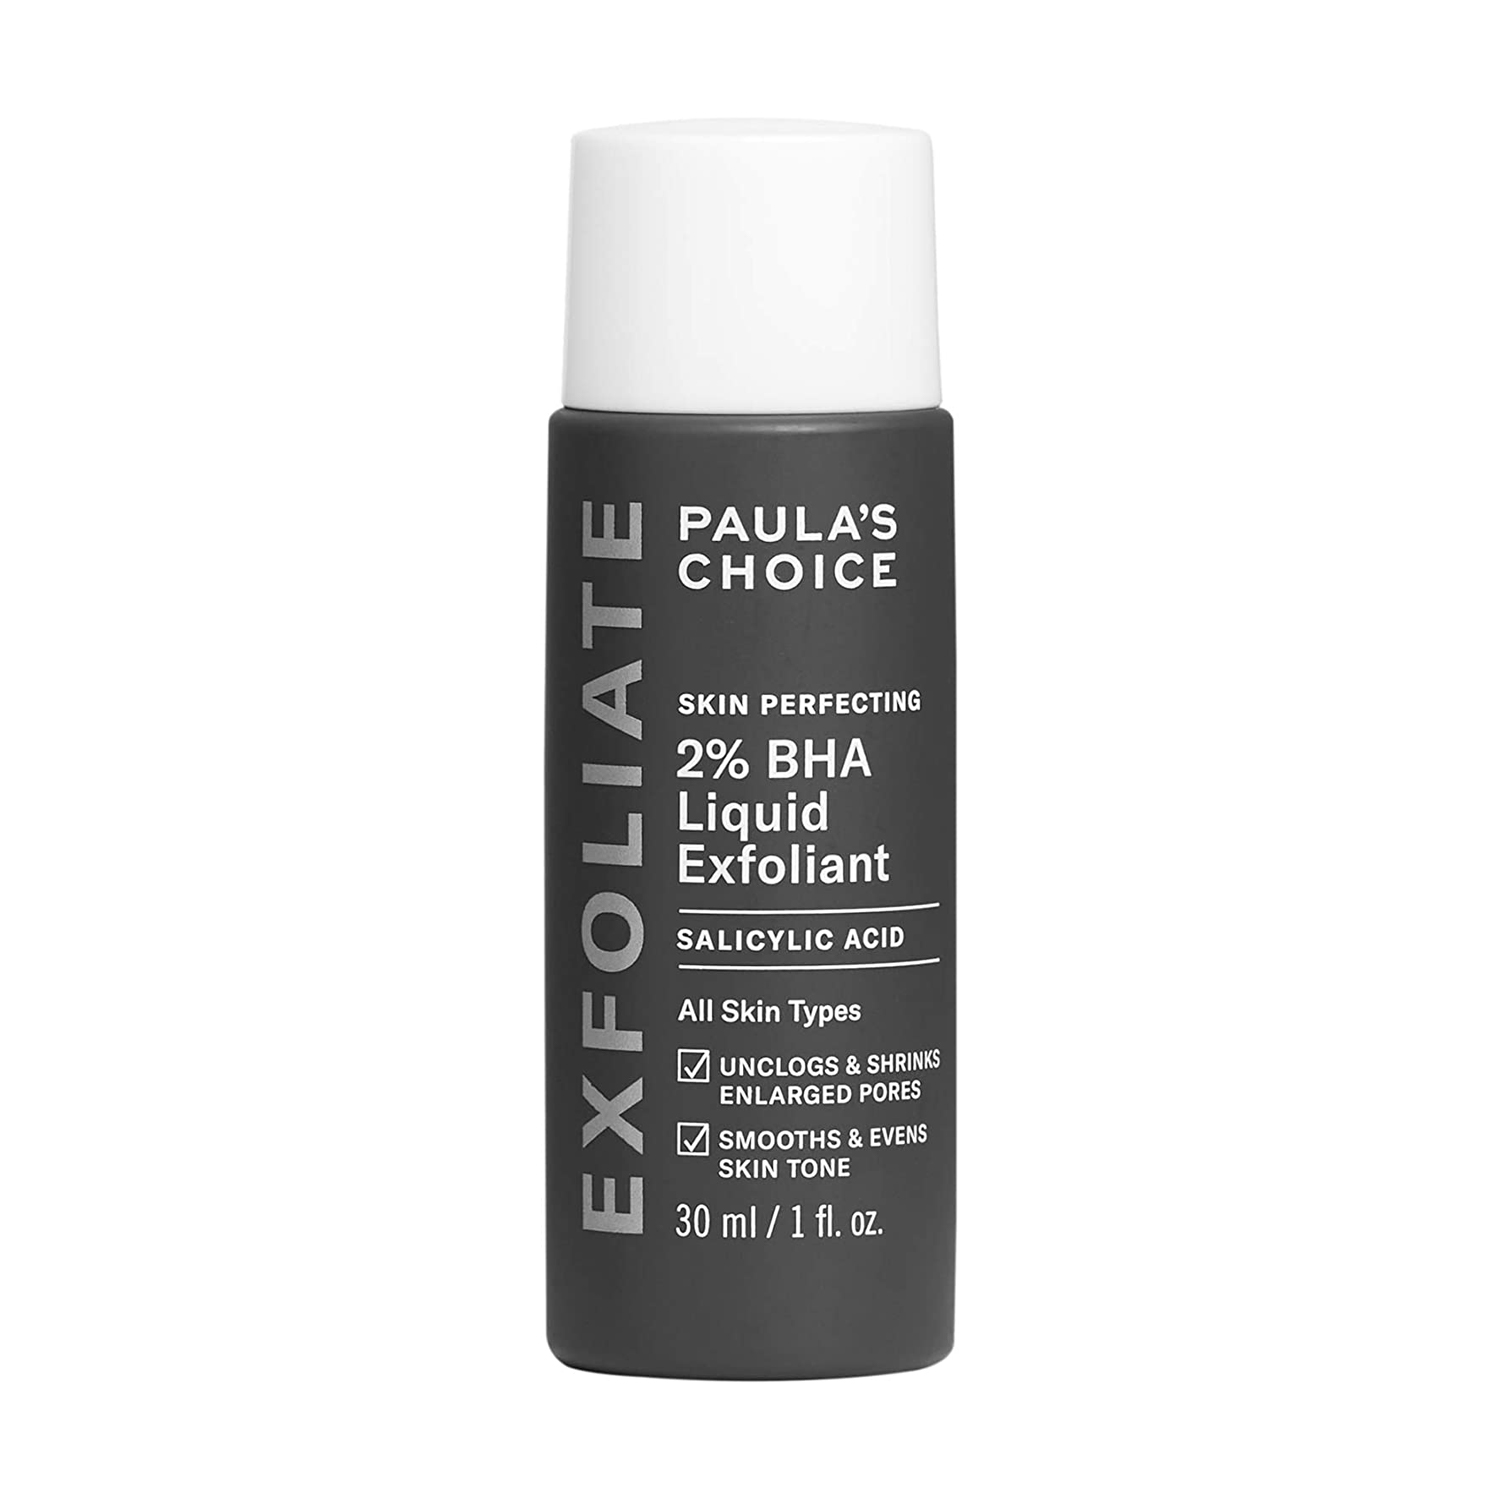 Paula's Choice 2% BHA Liquid Exfoliant (30ml)